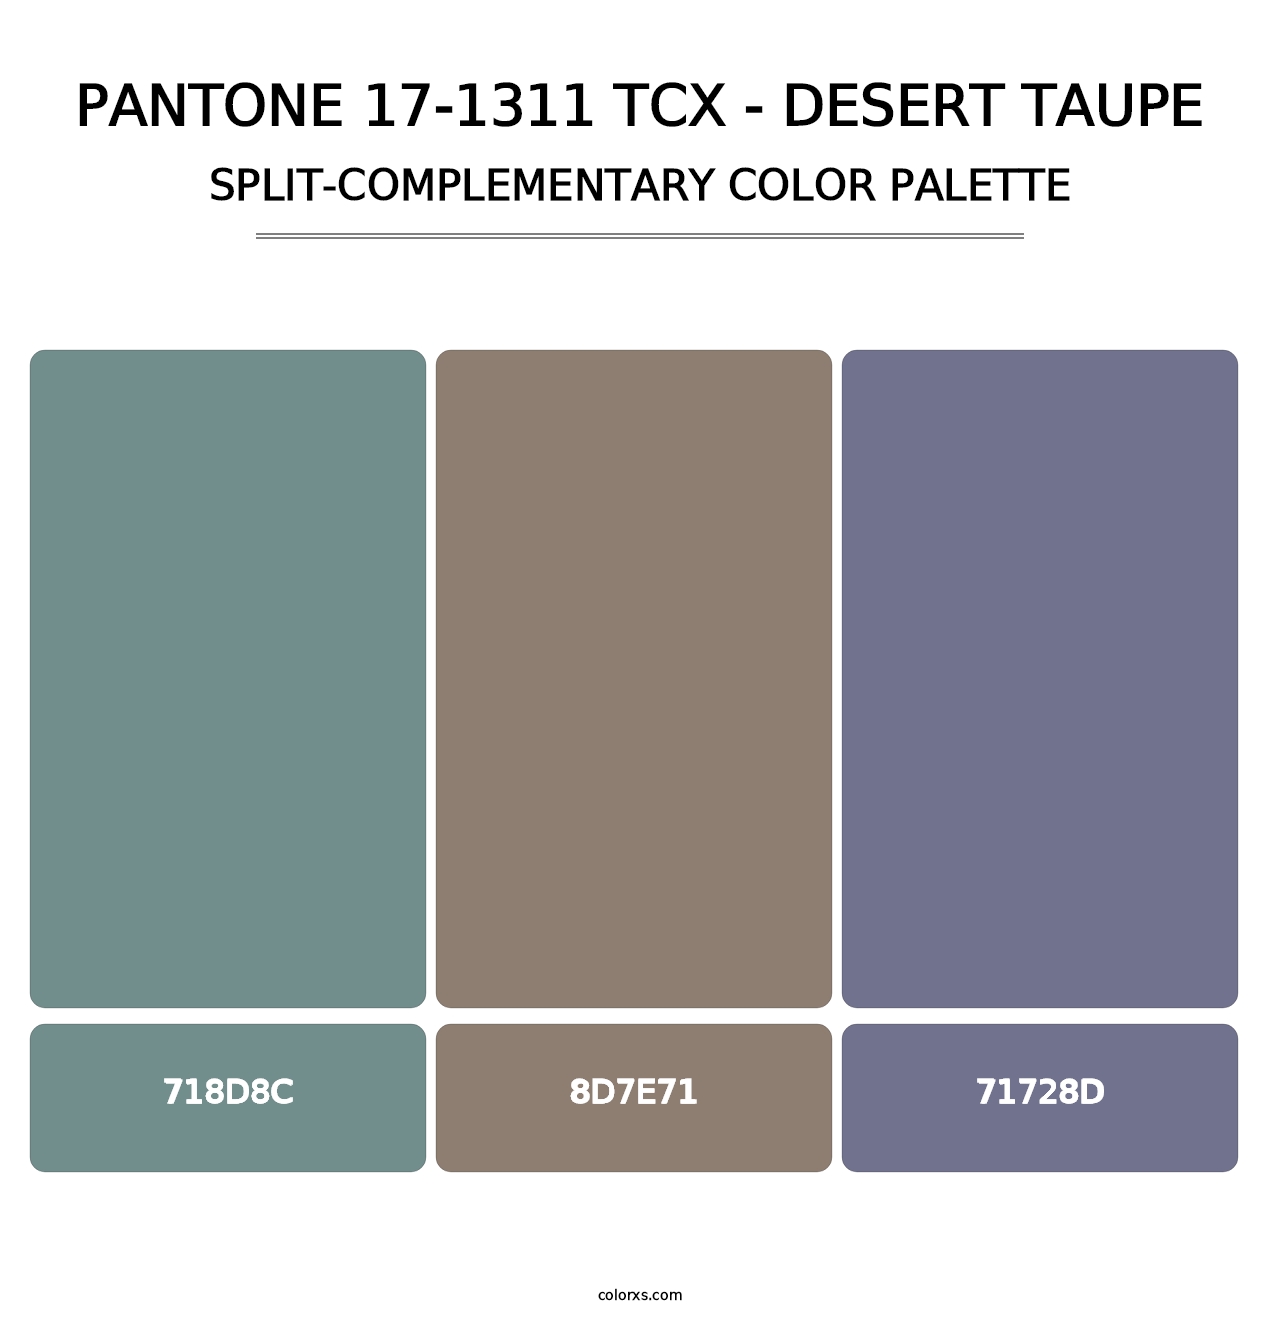 PANTONE 17-1311 TCX - Desert Taupe - Split-Complementary Color Palette